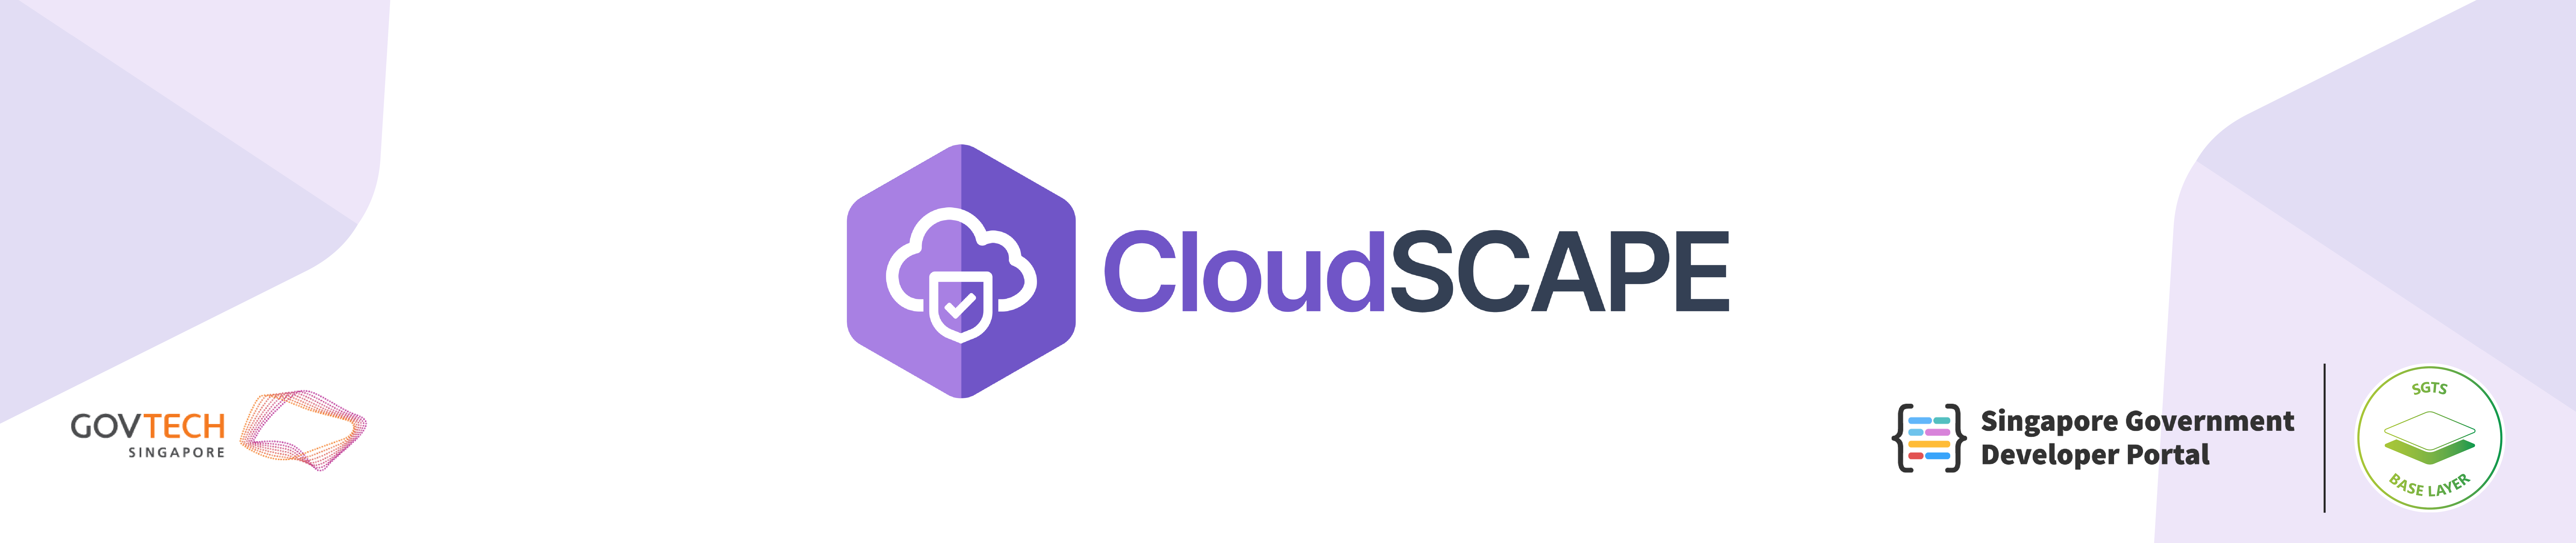 CloudSCAPE header banner